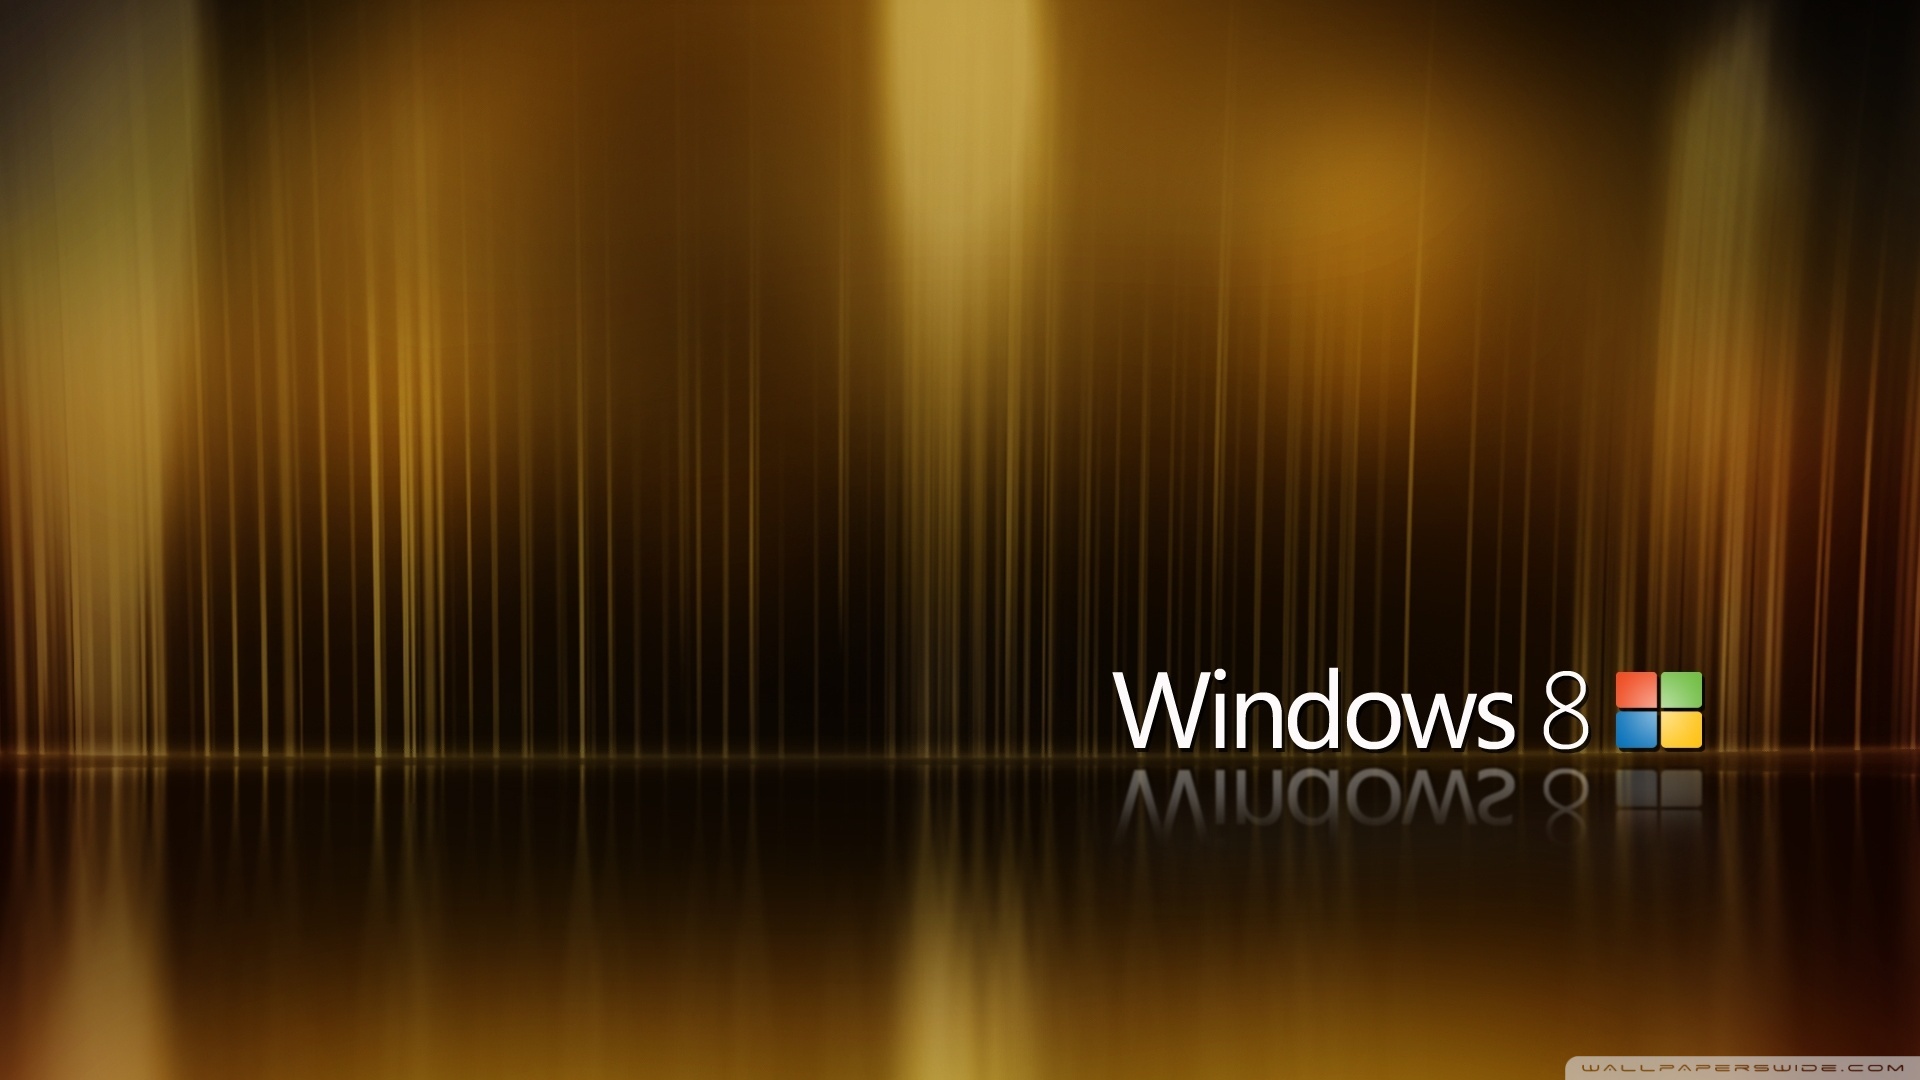 windows 8.1 wallpaper themes,reflection,light,text,yellow,sky